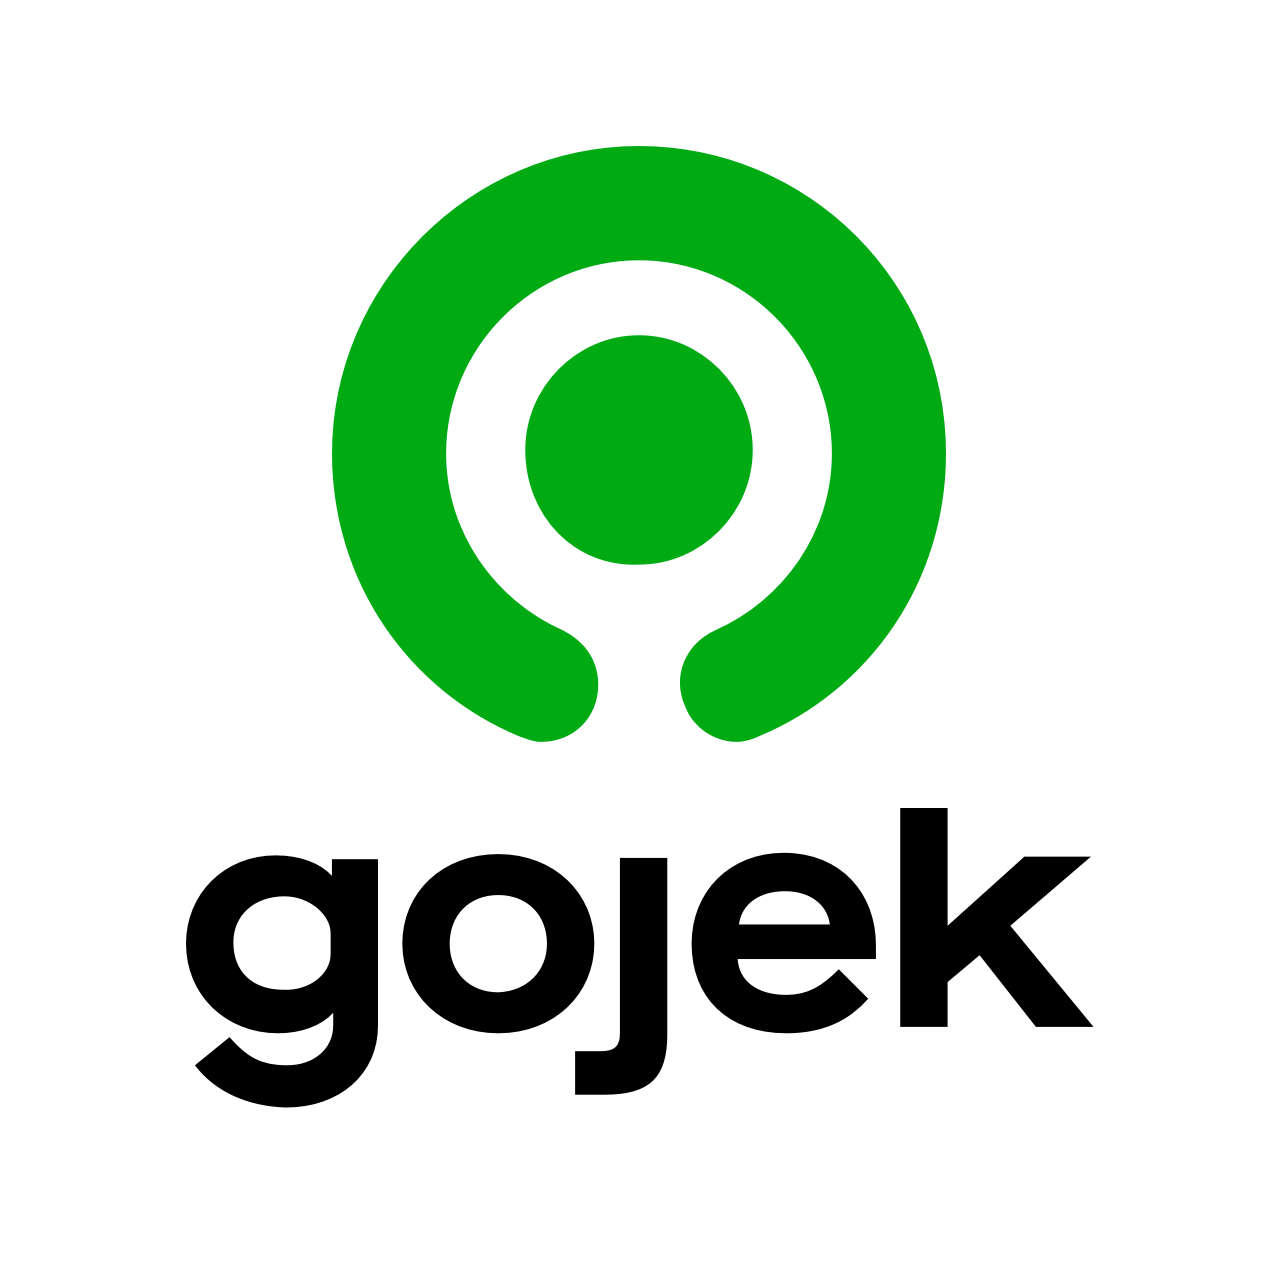 Gojek startup company logo